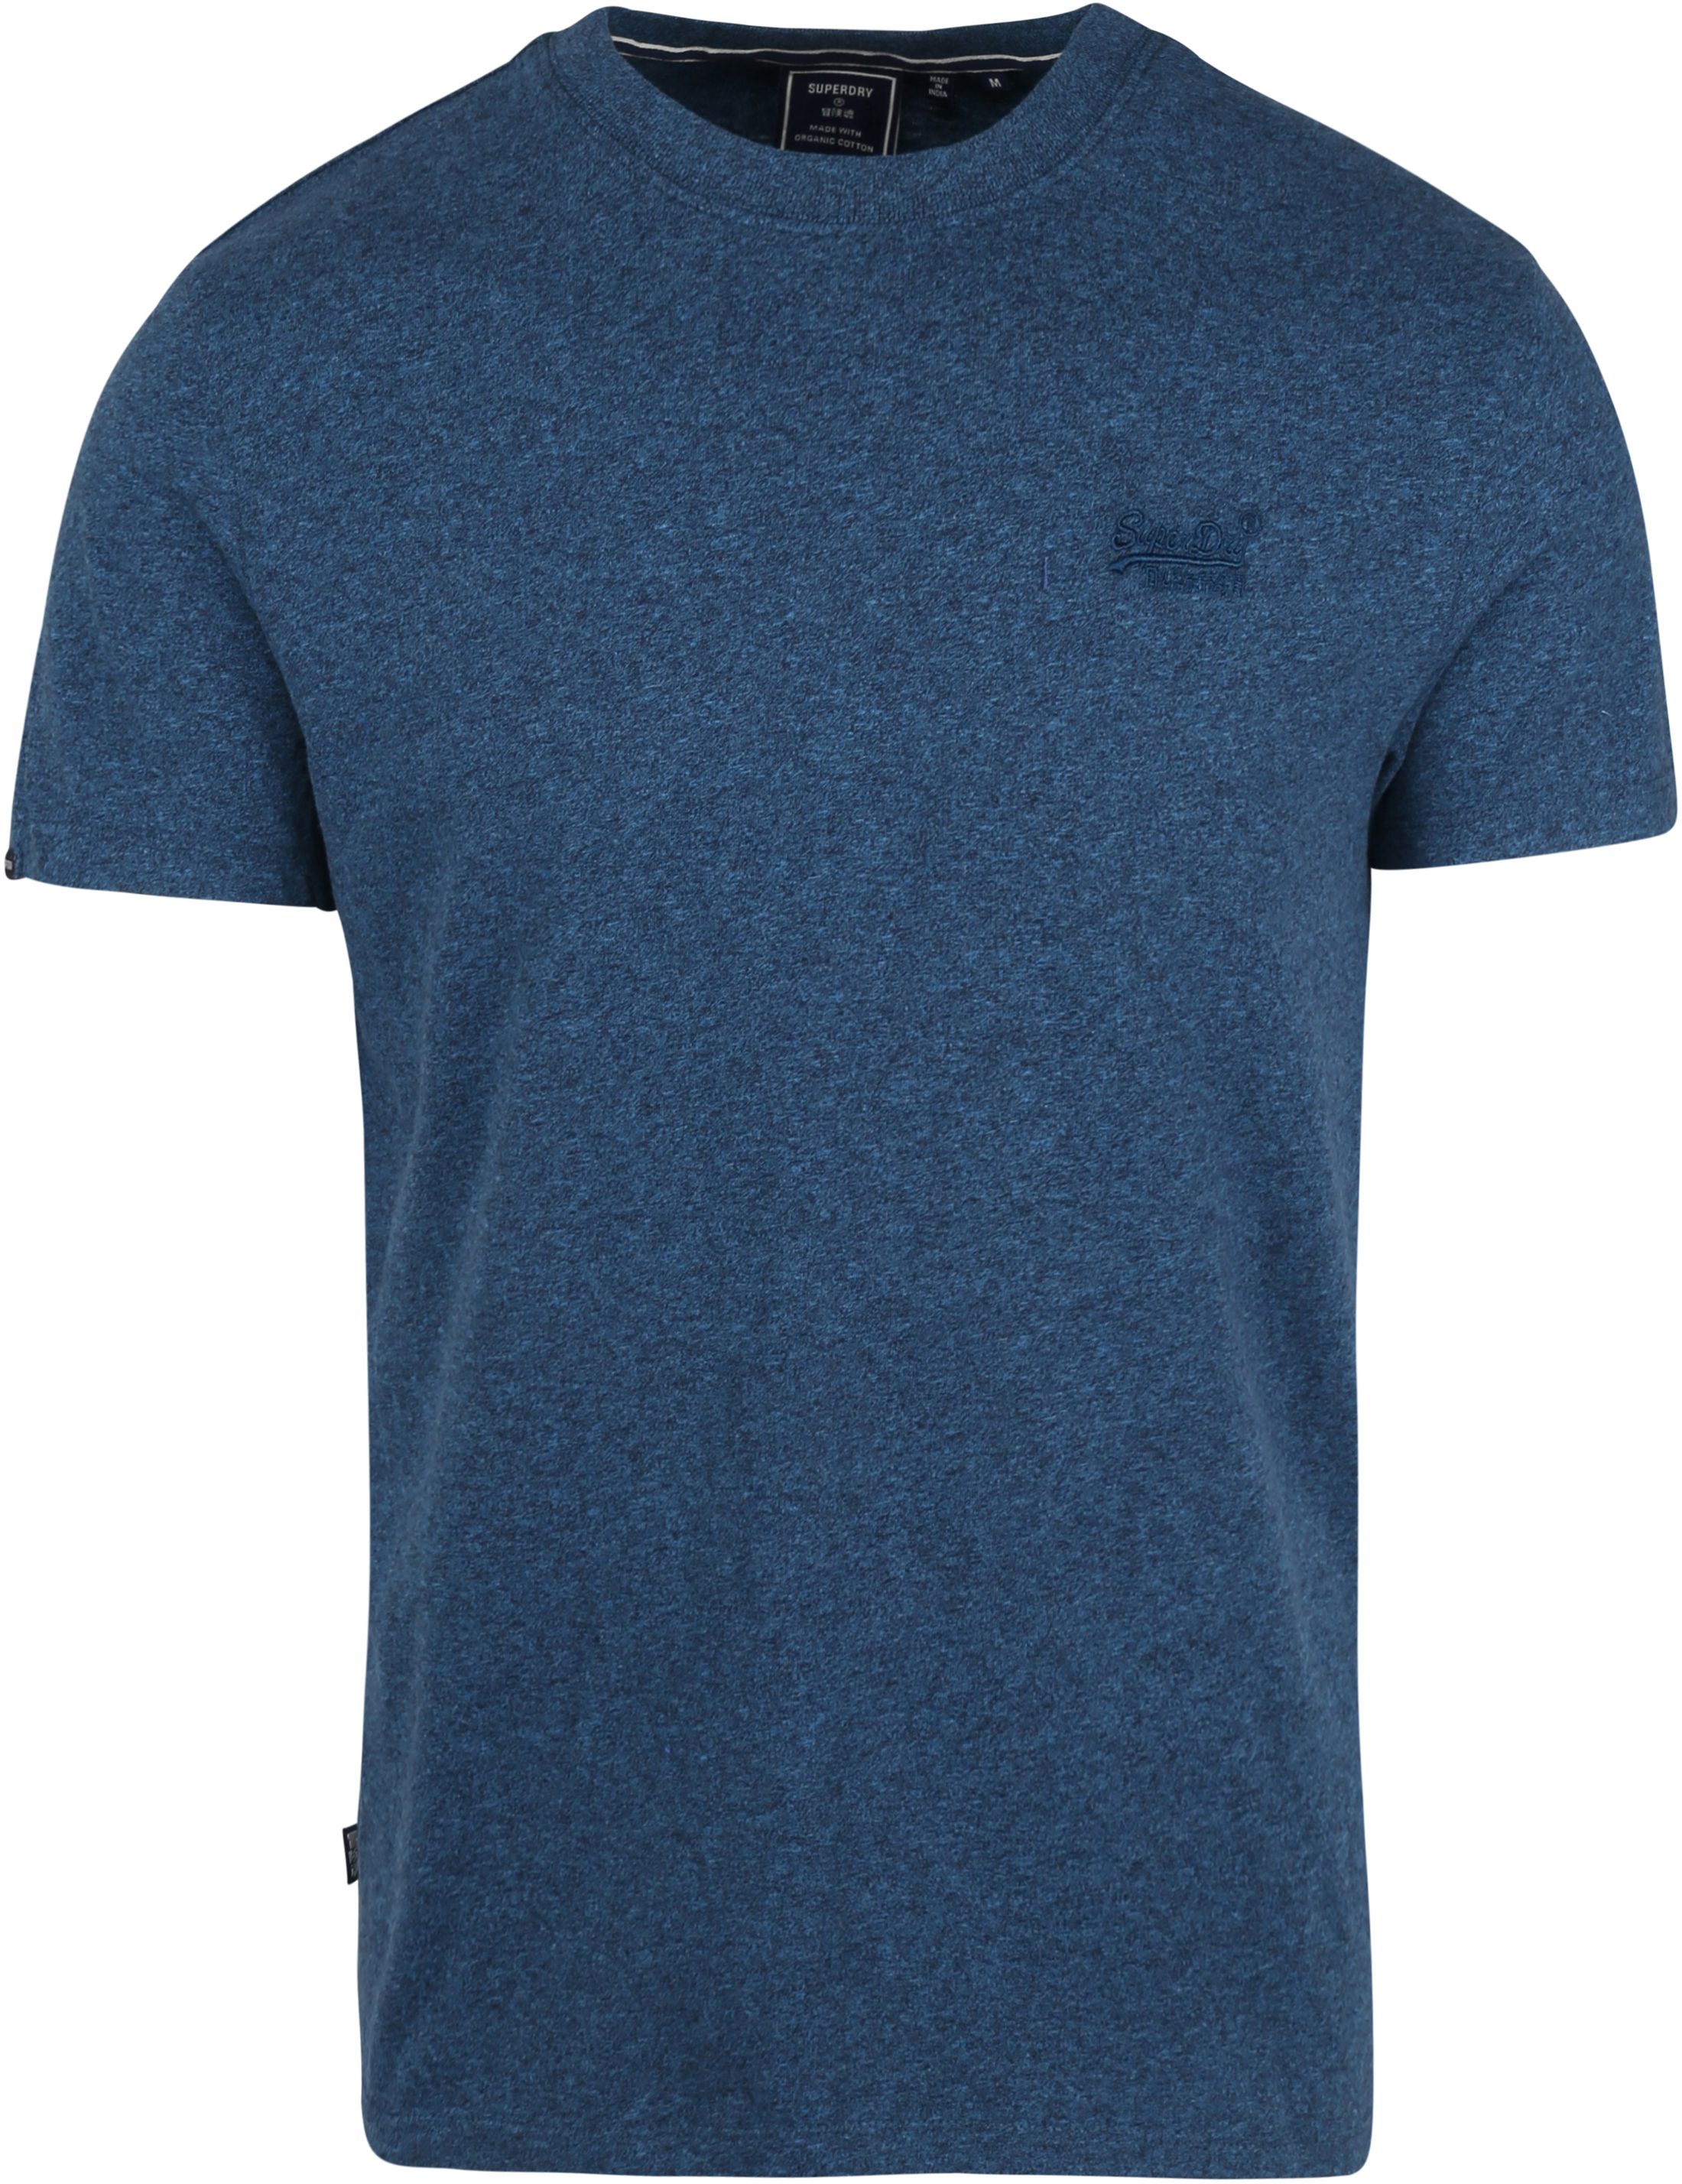 Superdry Classic T Shirt Darkblue Blue size 3XL